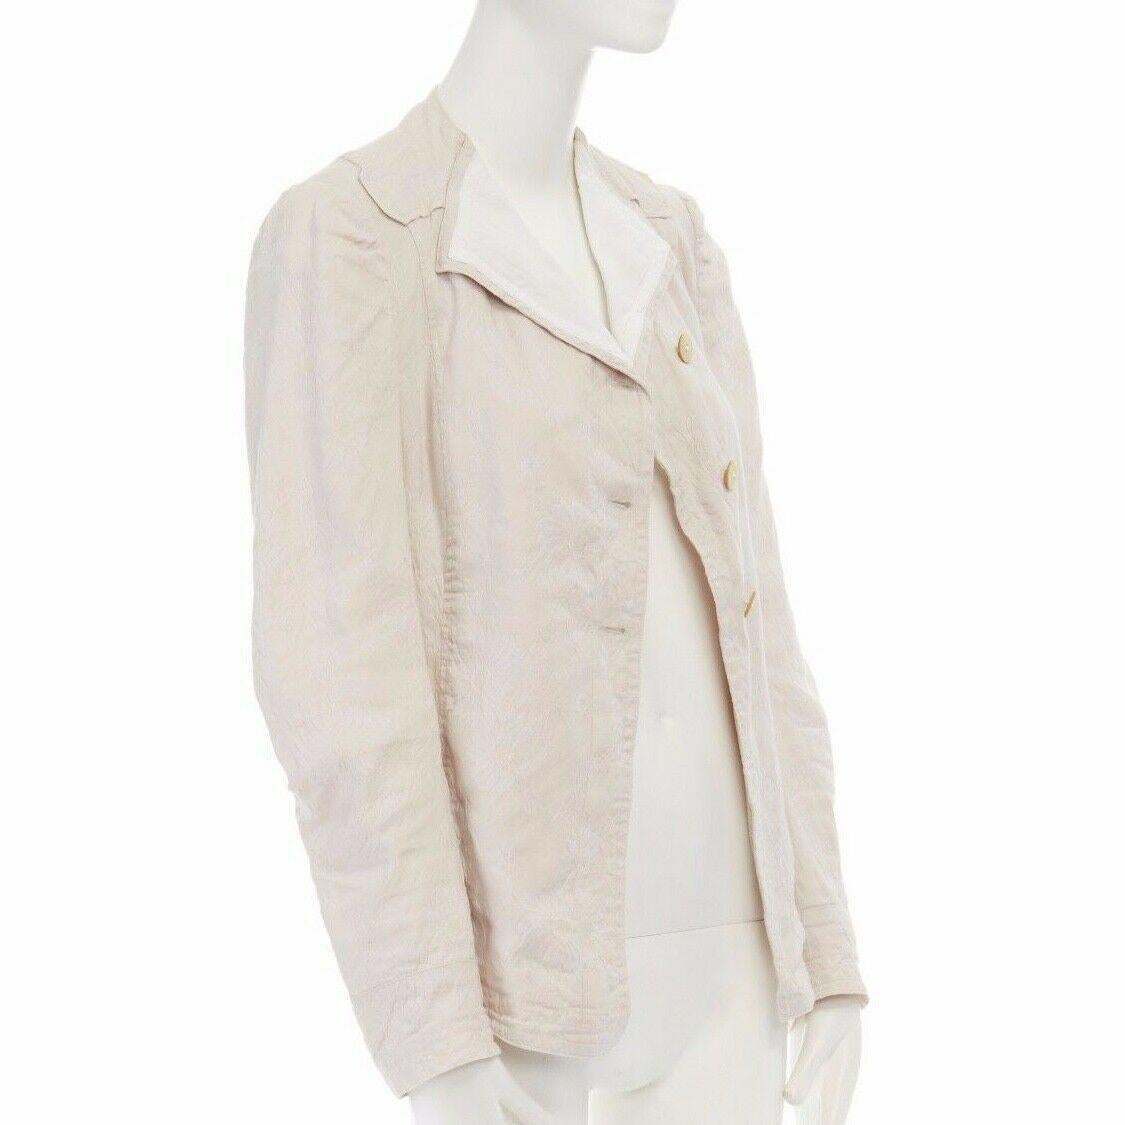 Women's DRIES VAN NOTEN cream floral jacquard spread collar pleated sleeve jacket FR36 S